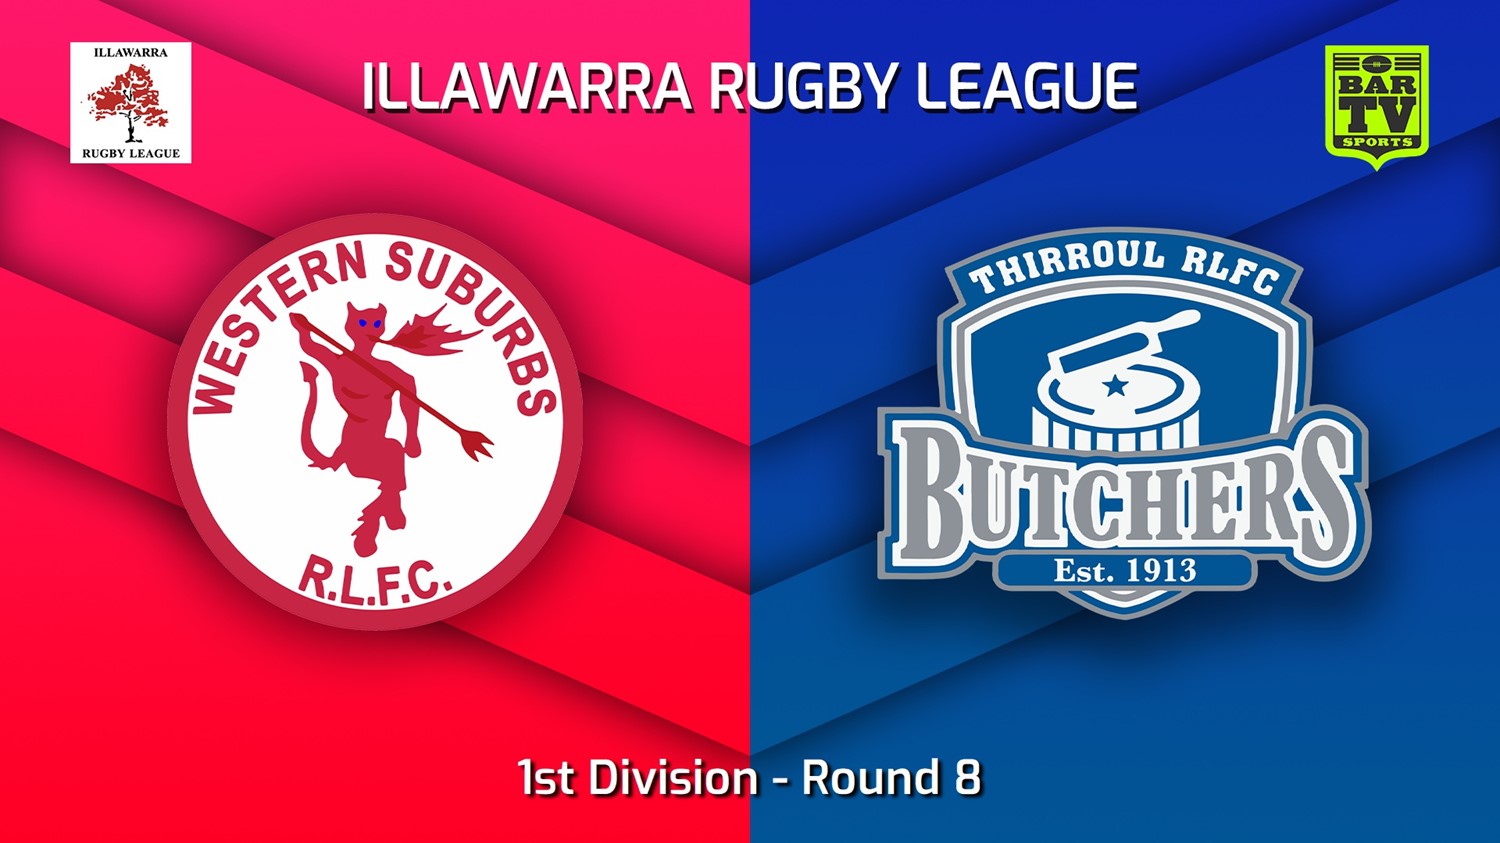 220625-Illawarra Round 8 - 1st Division - Western Suburbs Devils v Thirroul Butchers Slate Image